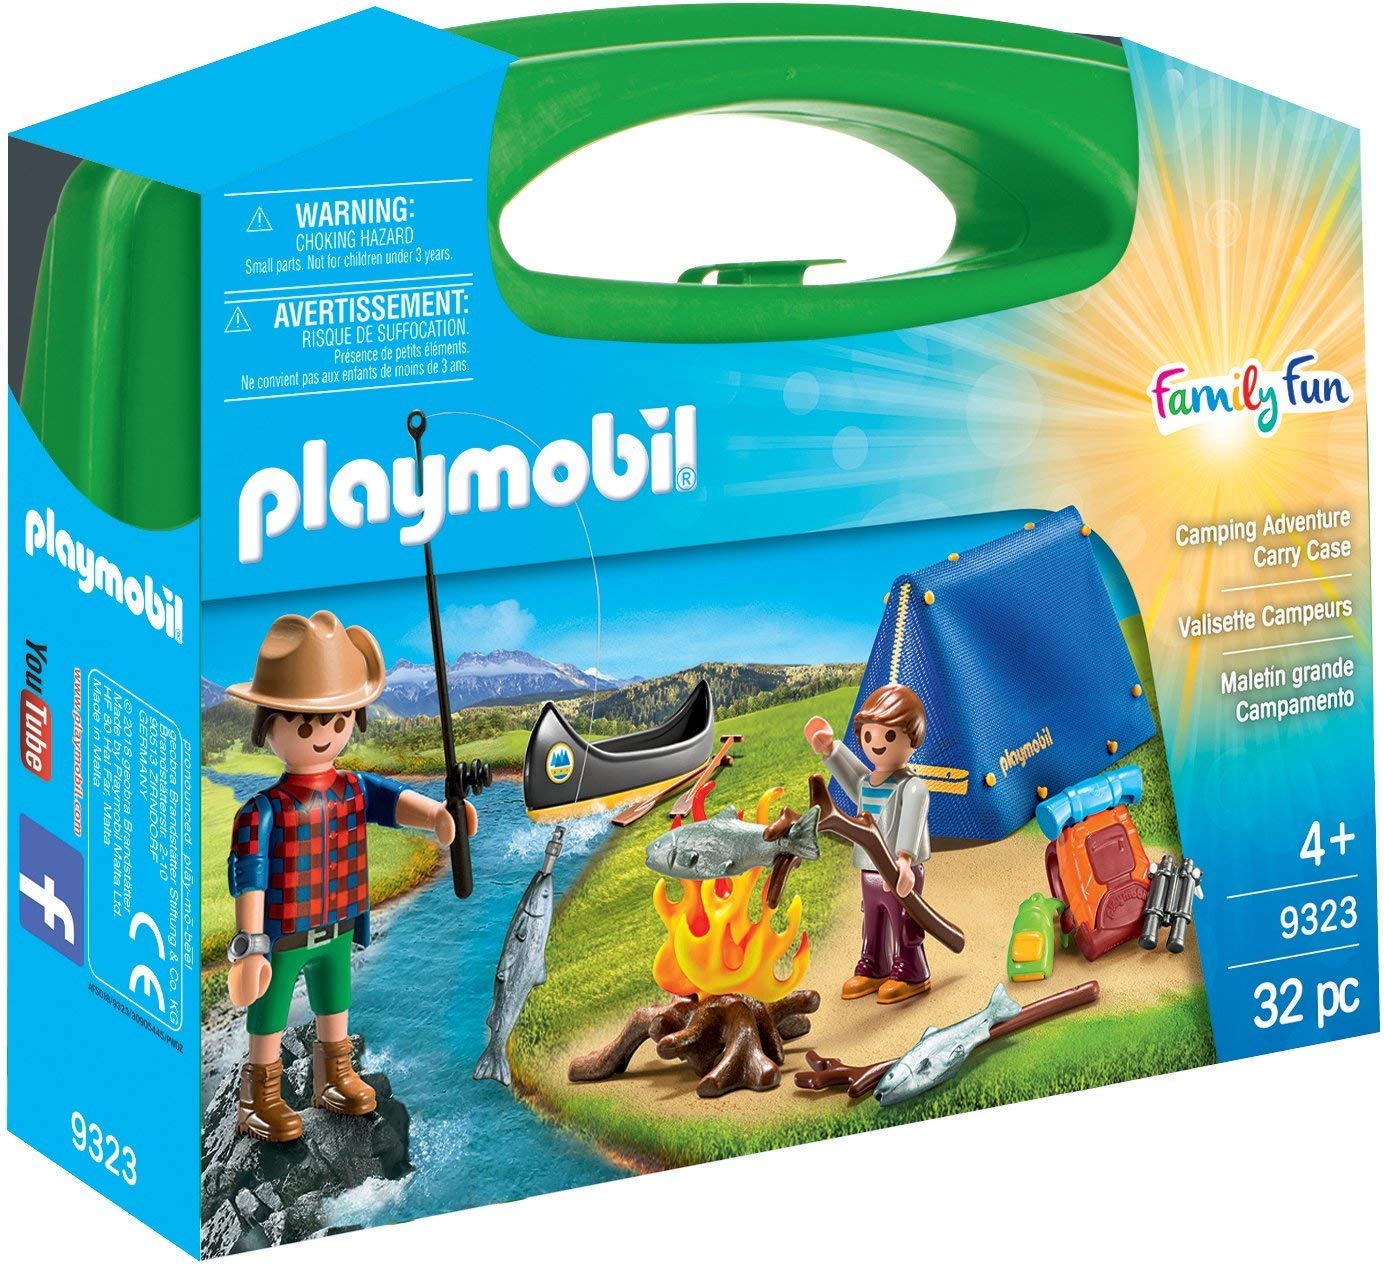 Playmobil Pmb-Set07 Camping Adventure Carry Case Building Set, Transparent,